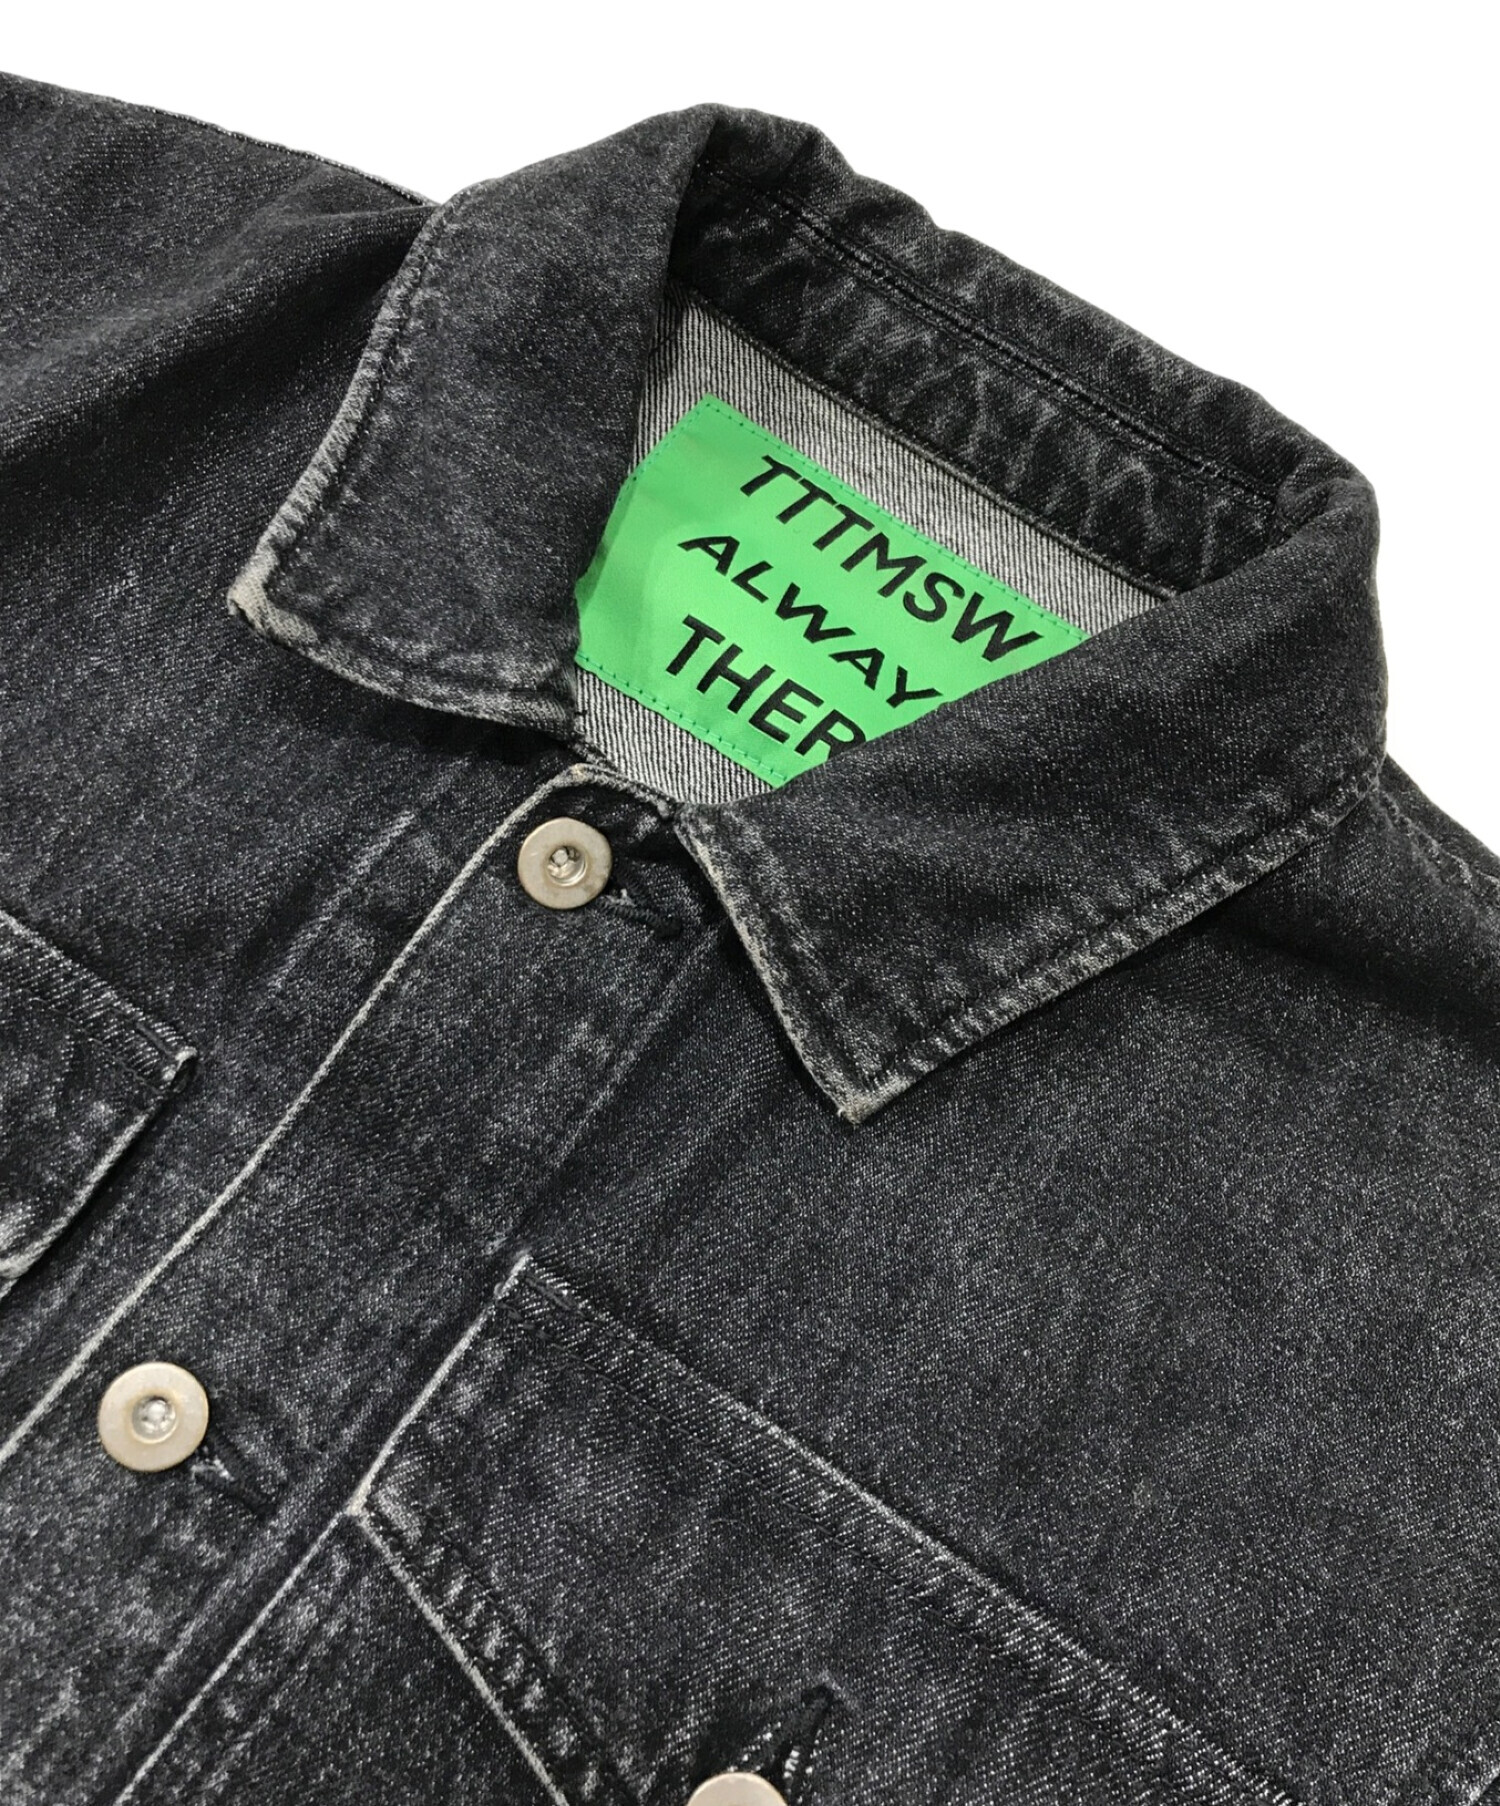 TTT MSW (ティーモダンストリートウェア) New Standard Denim Work Jacket　 ニュースタンダードデニムワークジャケット ブラック サイズ:M